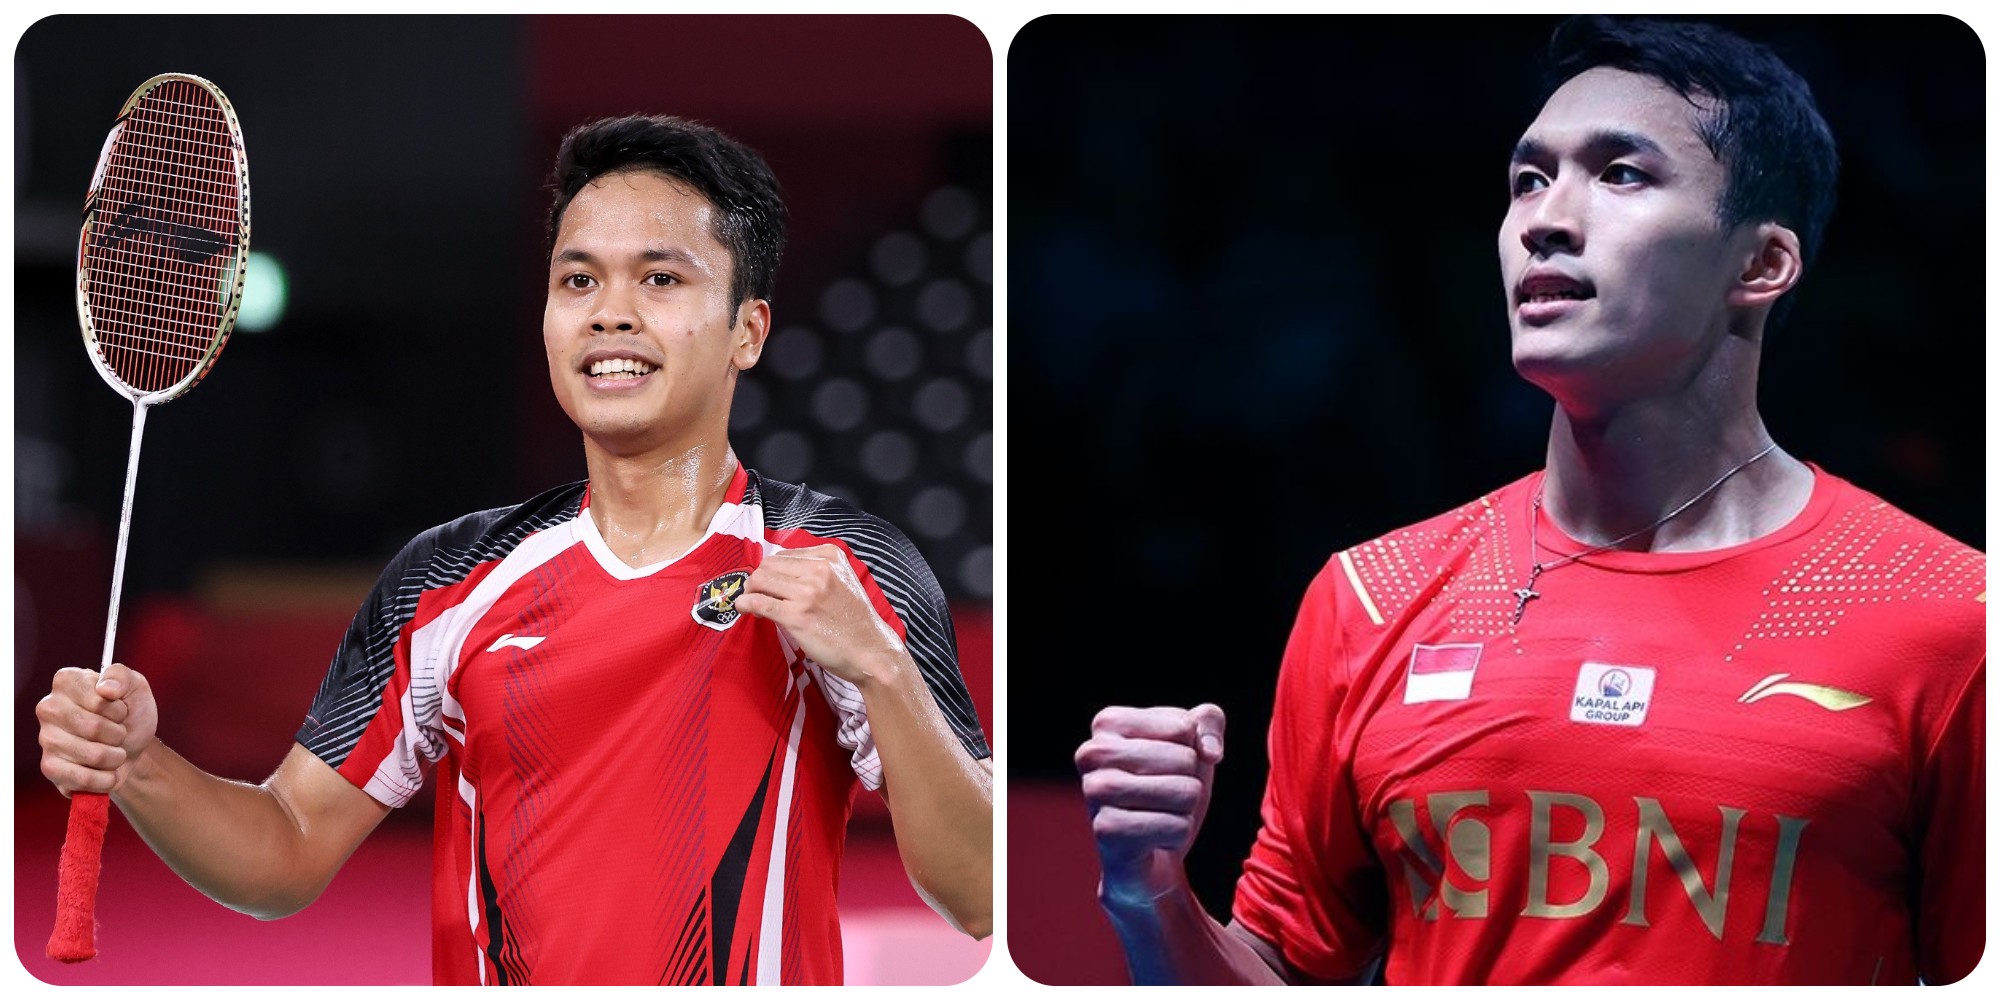 Bangga! Indonesia Menangi Piala Thomas 2020 Setelah Penantian 19 Tahun